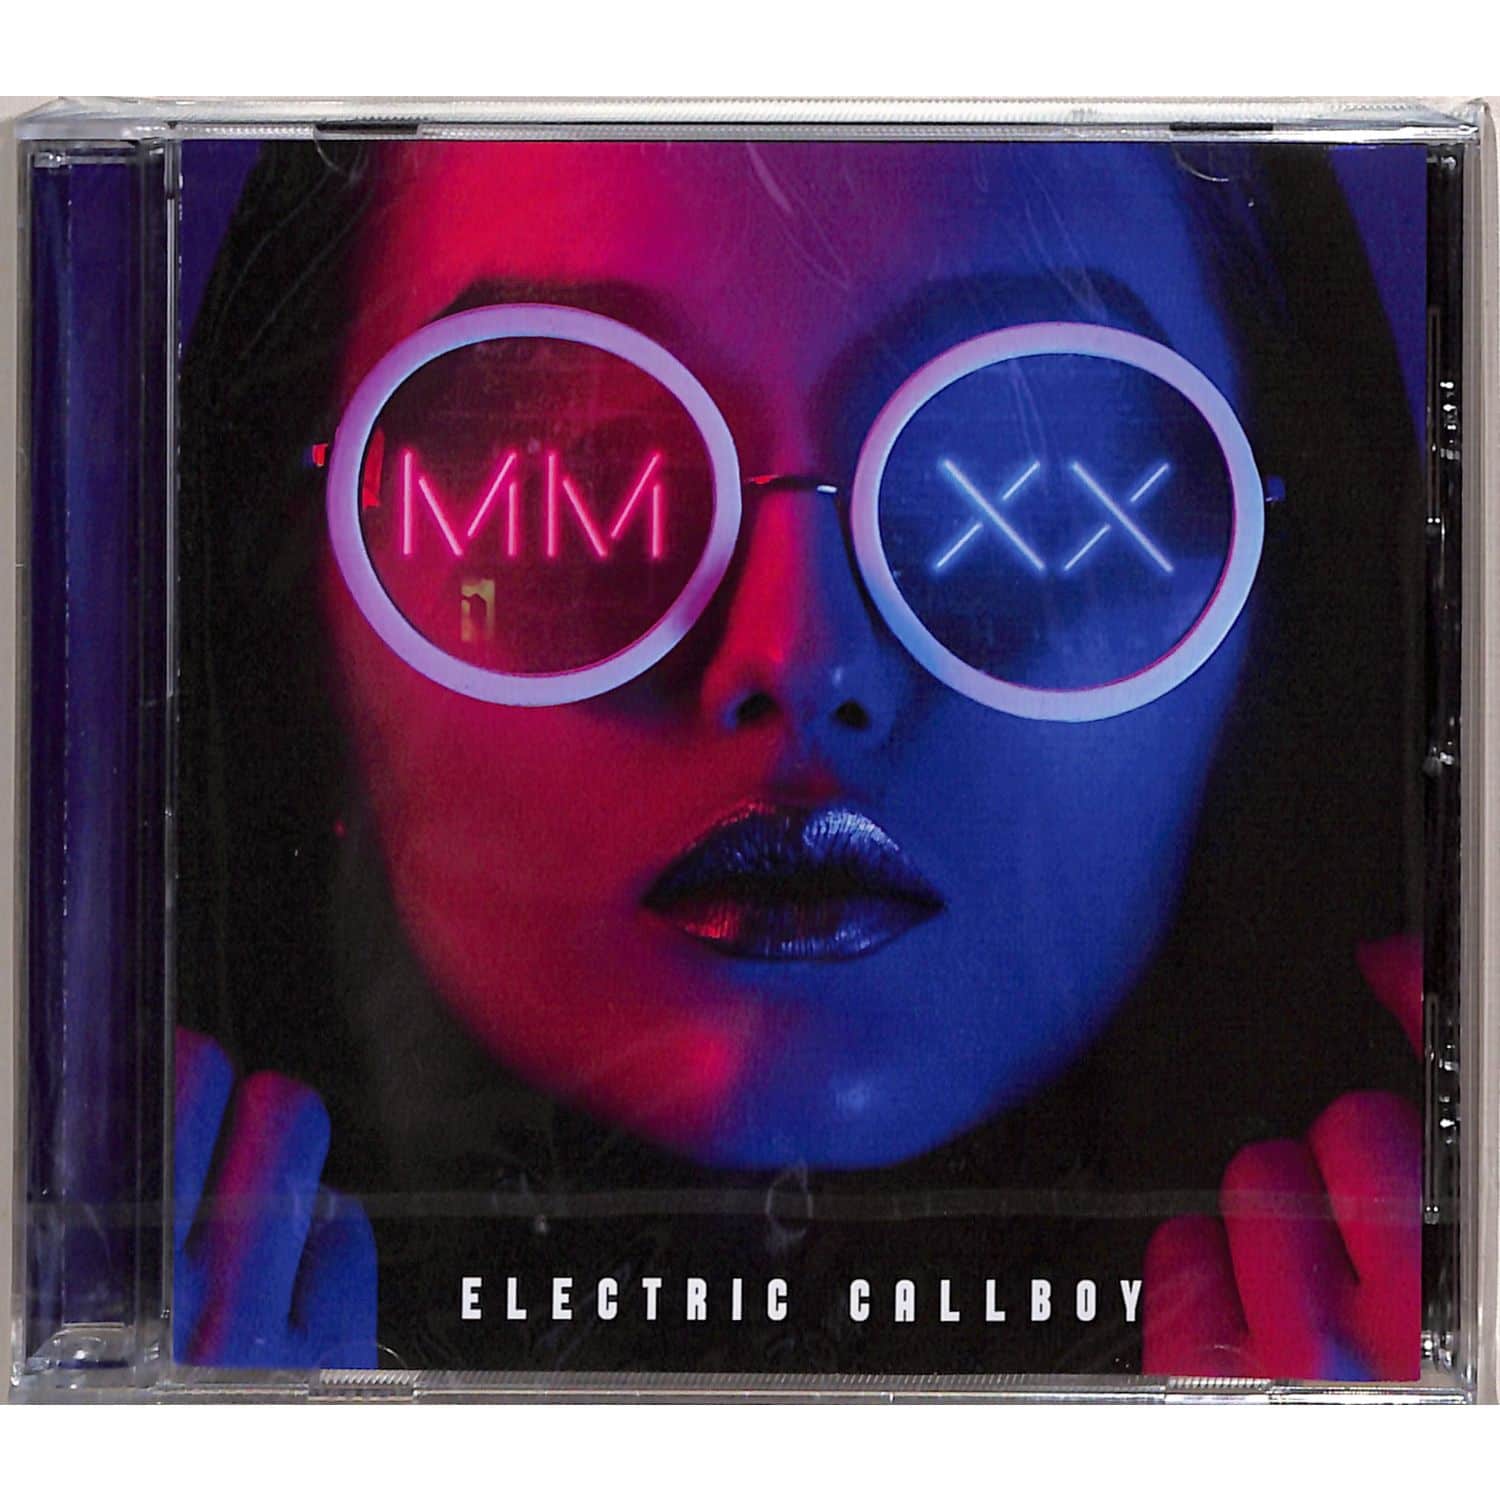 Electric Callboy - MMXX - EP